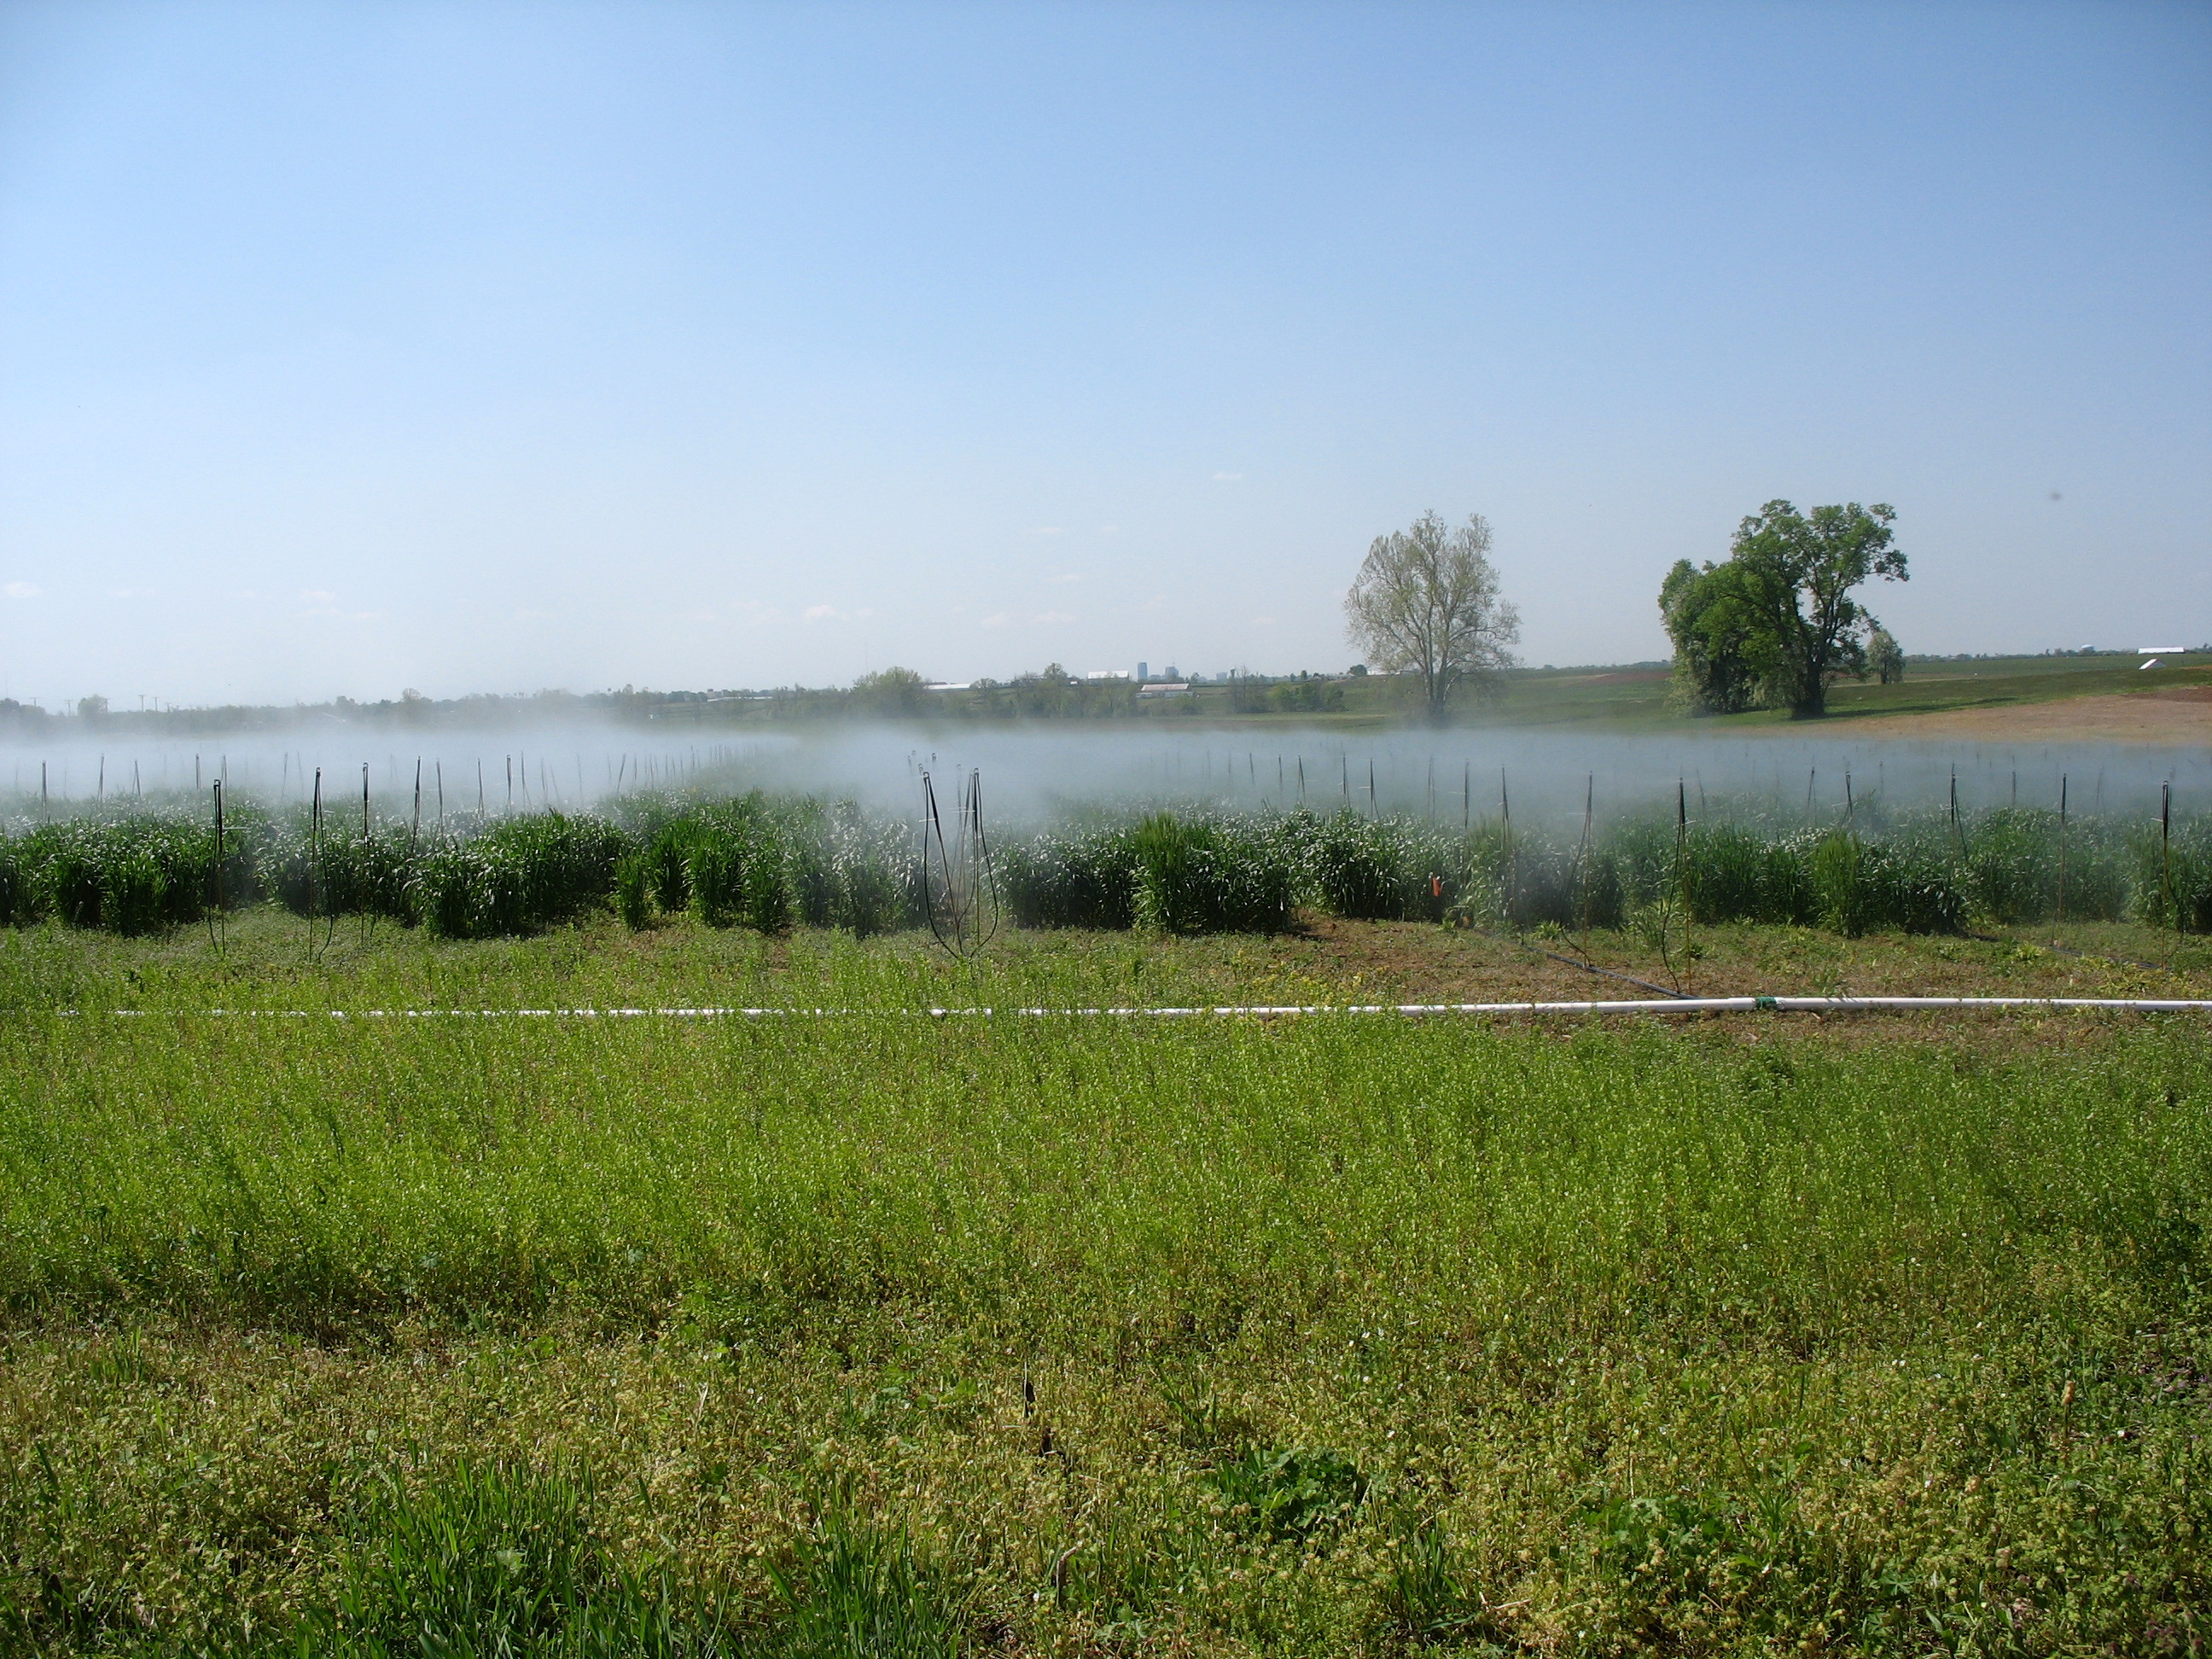 Mist irrigation